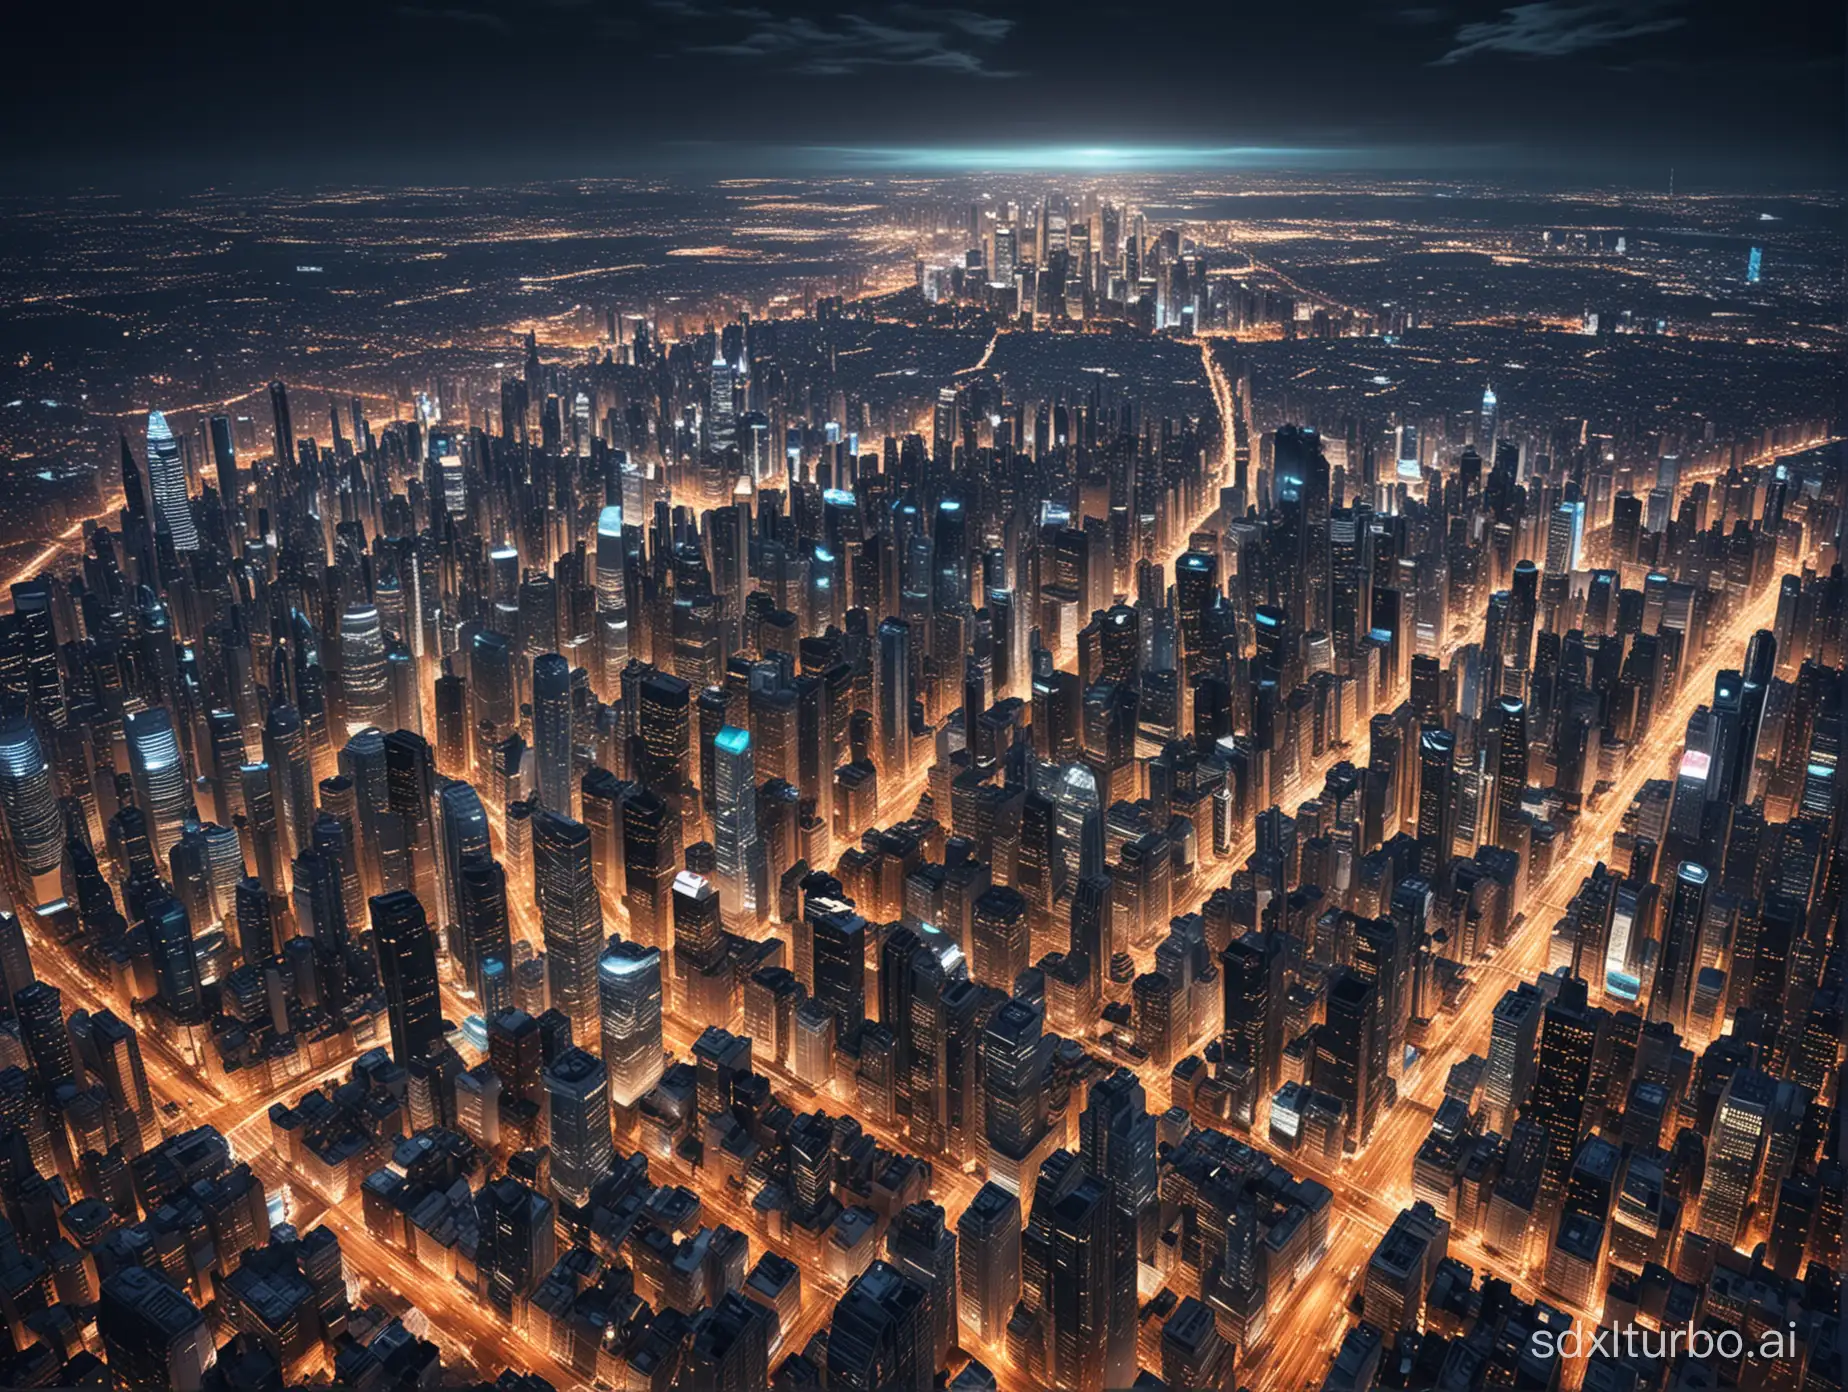 Futuristic-Cityscape-Illuminated-with-Vibrant-Lights